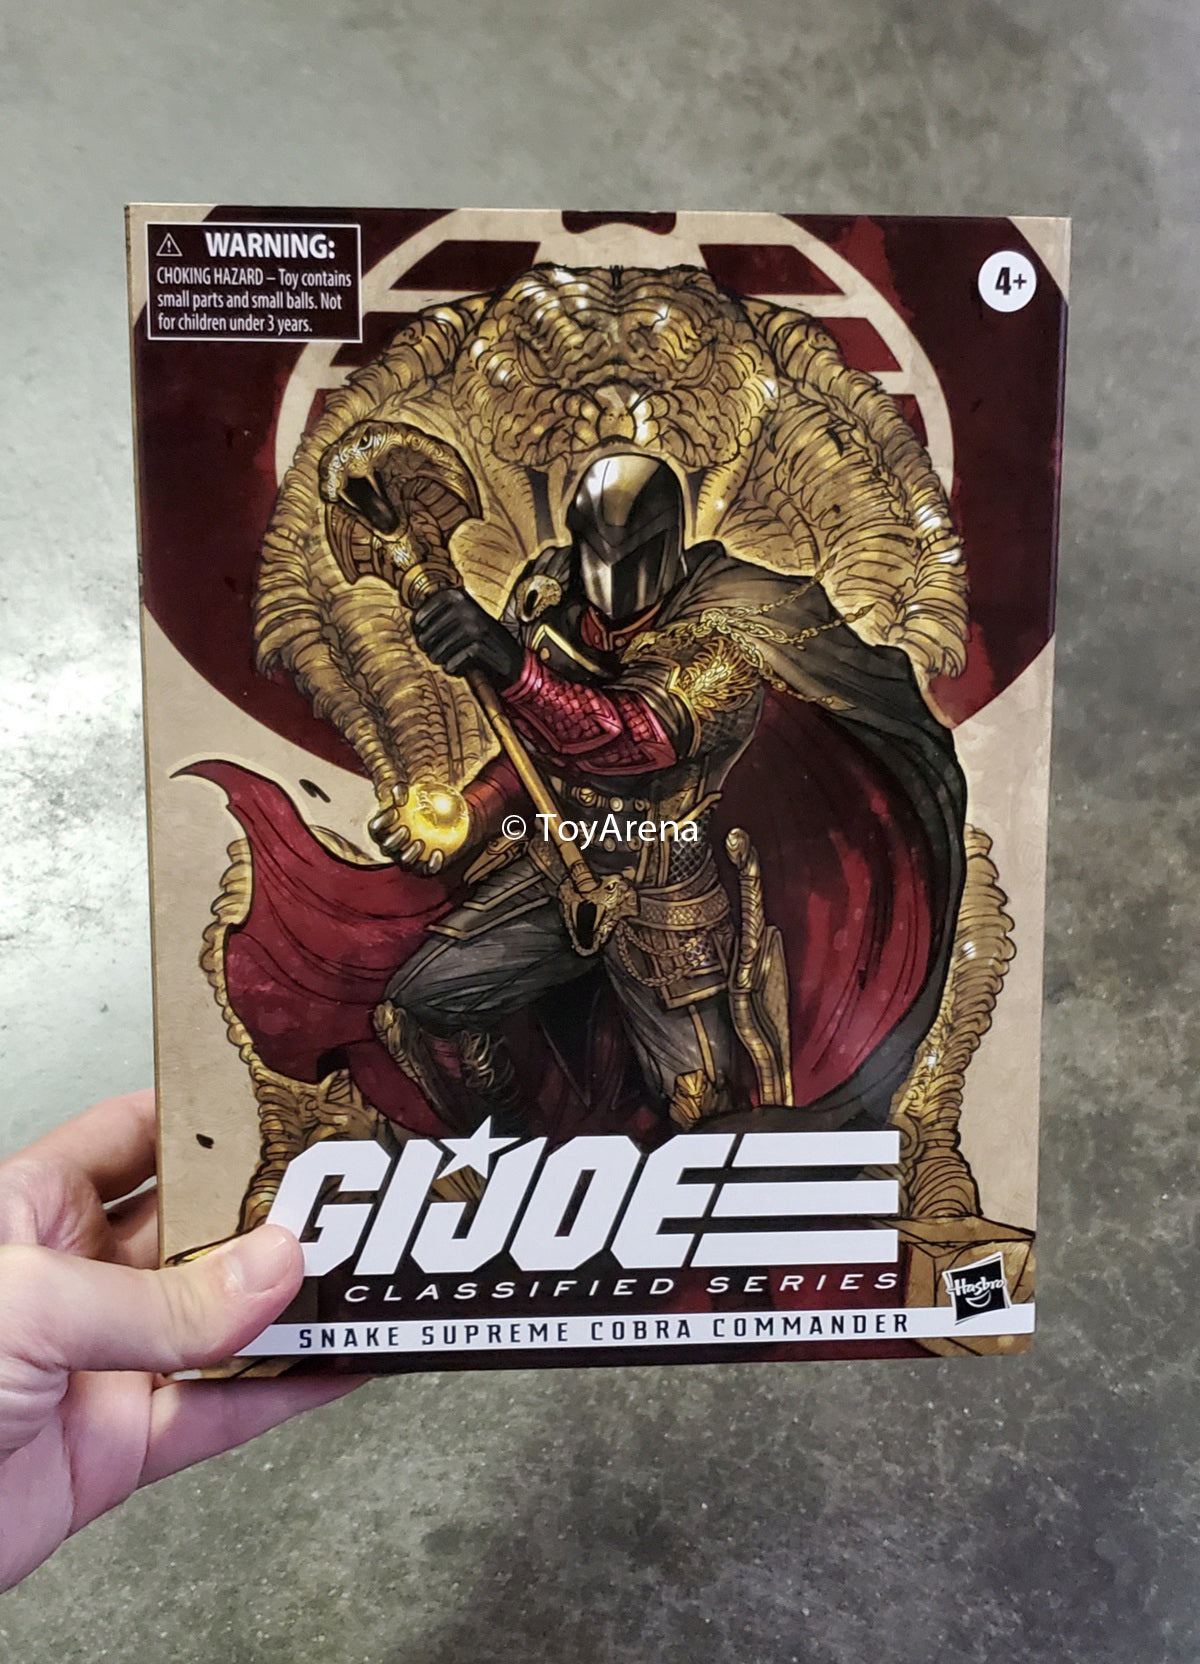 Hasbro G.I. Joe Classified Series #09 Snake Supreme Cobra Commander SDCC Exclusive Action Figure